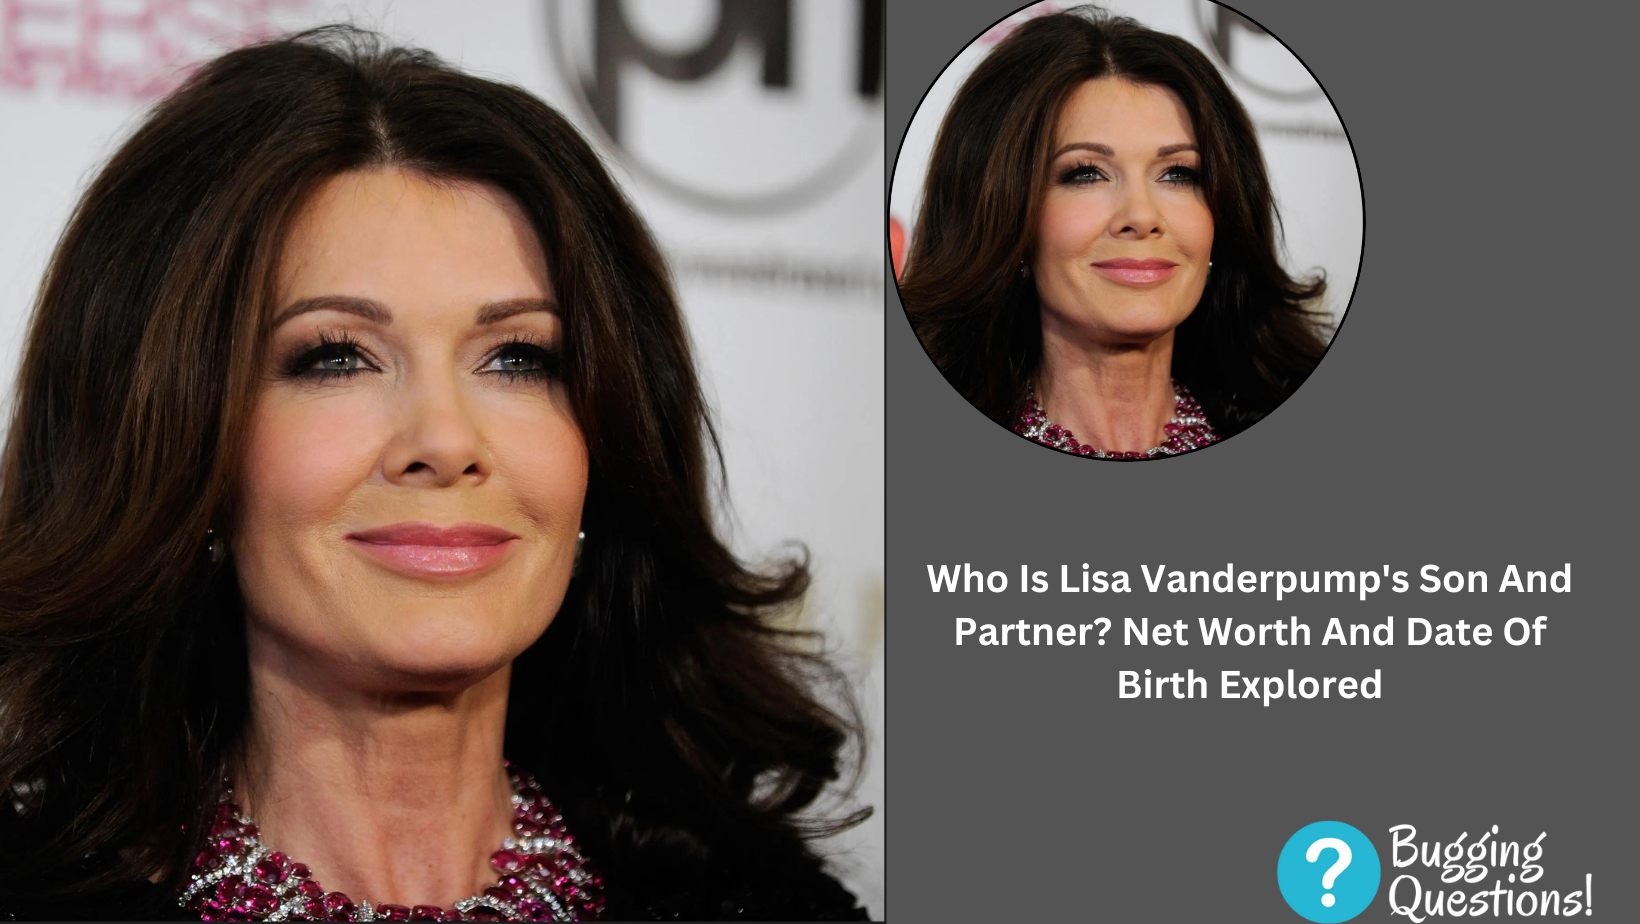 Who Is Lisa Vanderpump's Son And Partner?